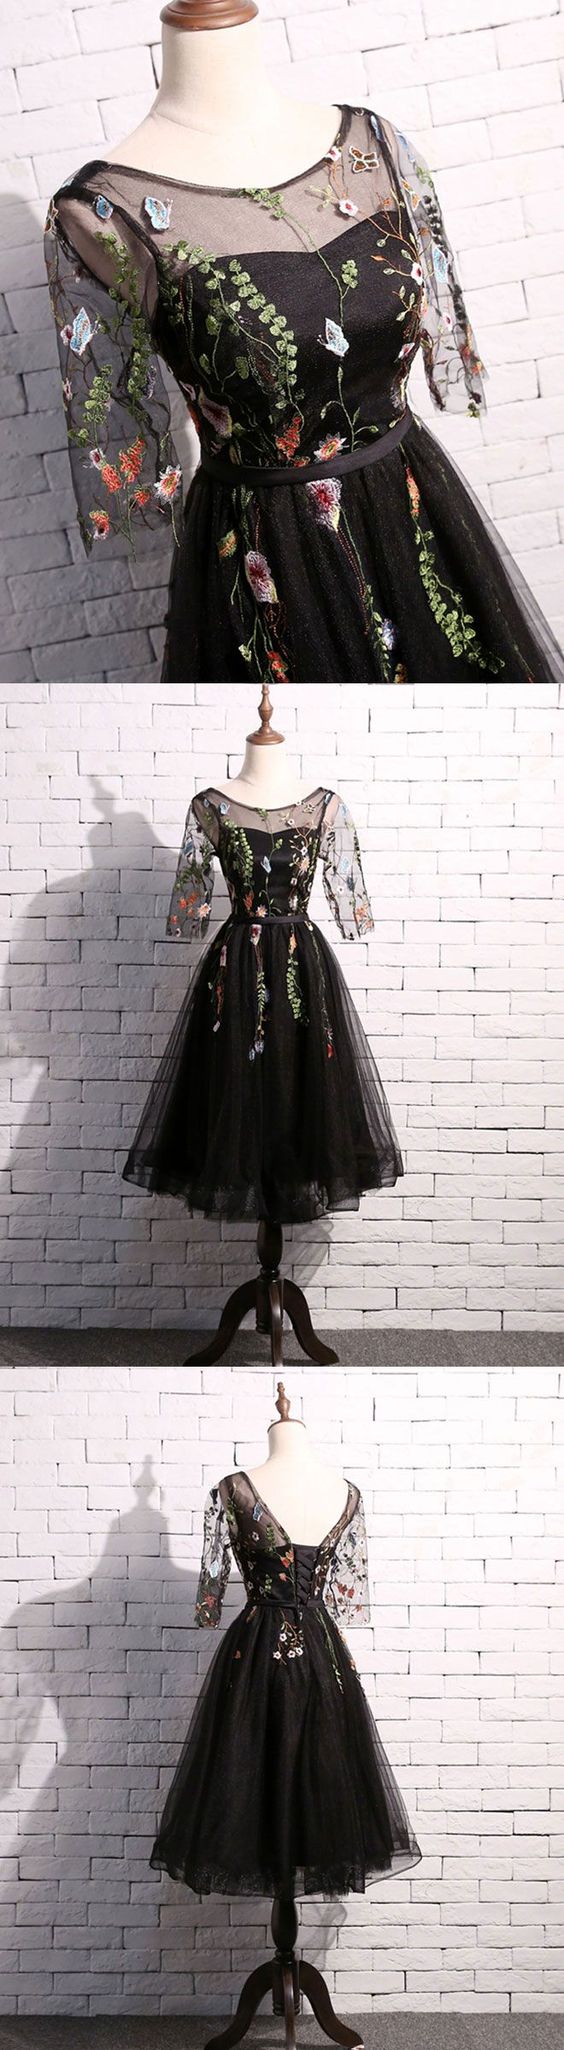 Cute Black Short Prom Dress, Black Homecoming Dress,h1391